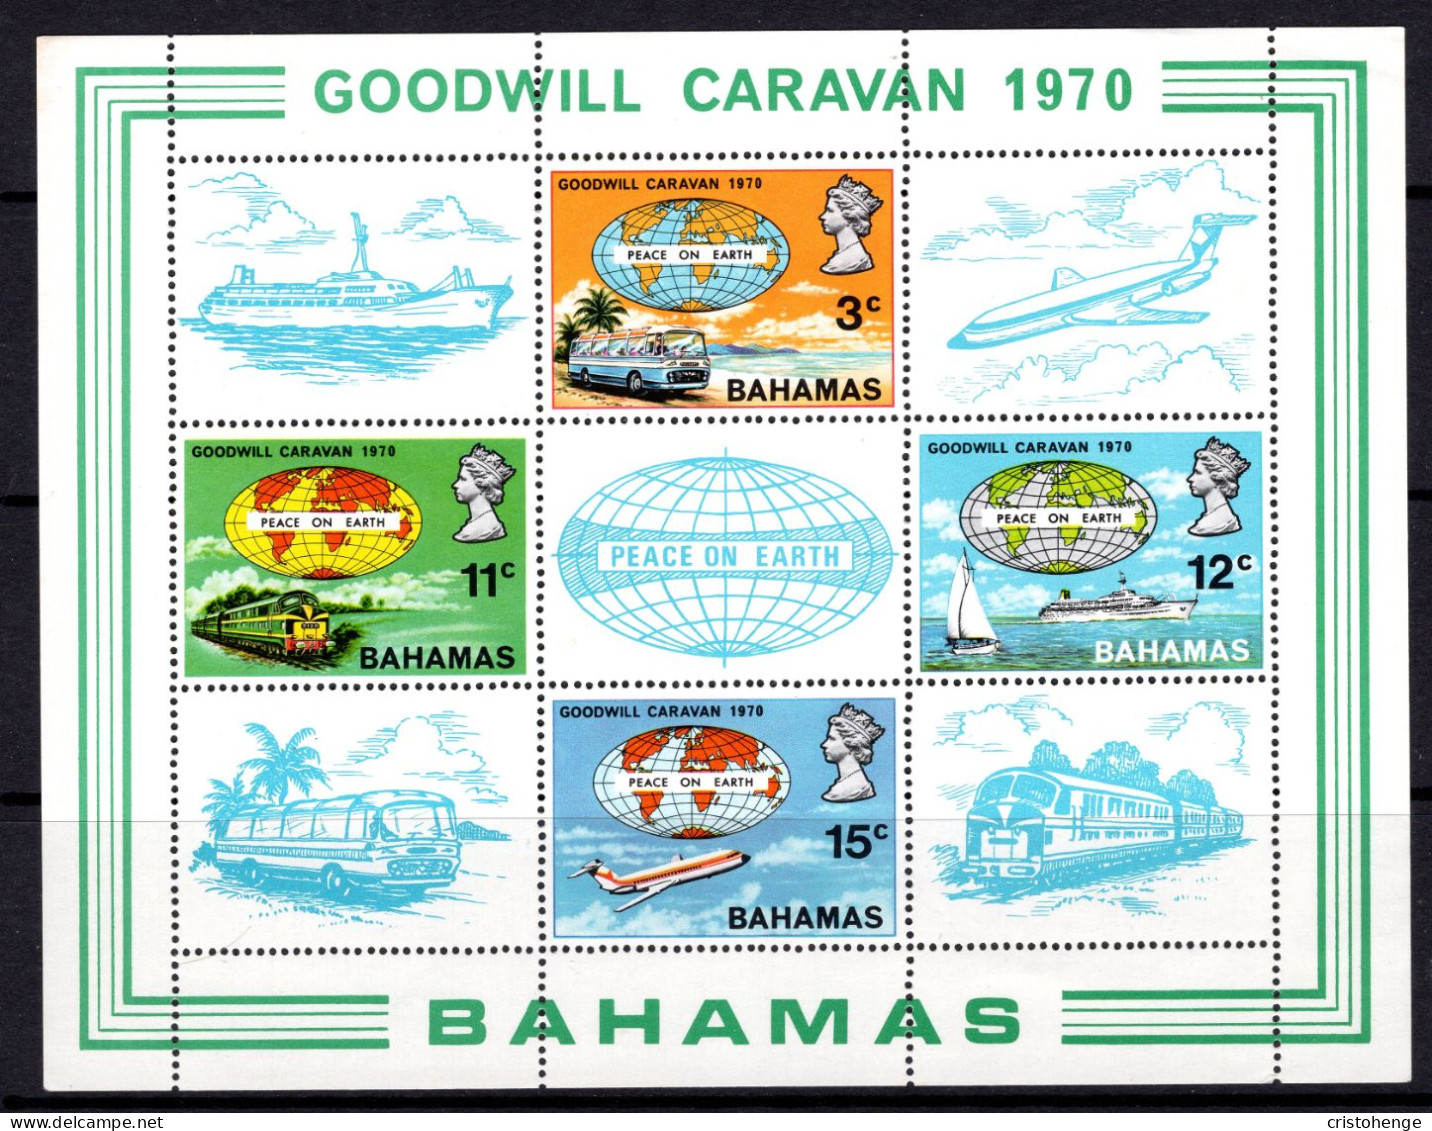 Bahamas 1970 Goodwill Caravan MS MNH (SG MS351) - 1963-1973 Autonomía Interna